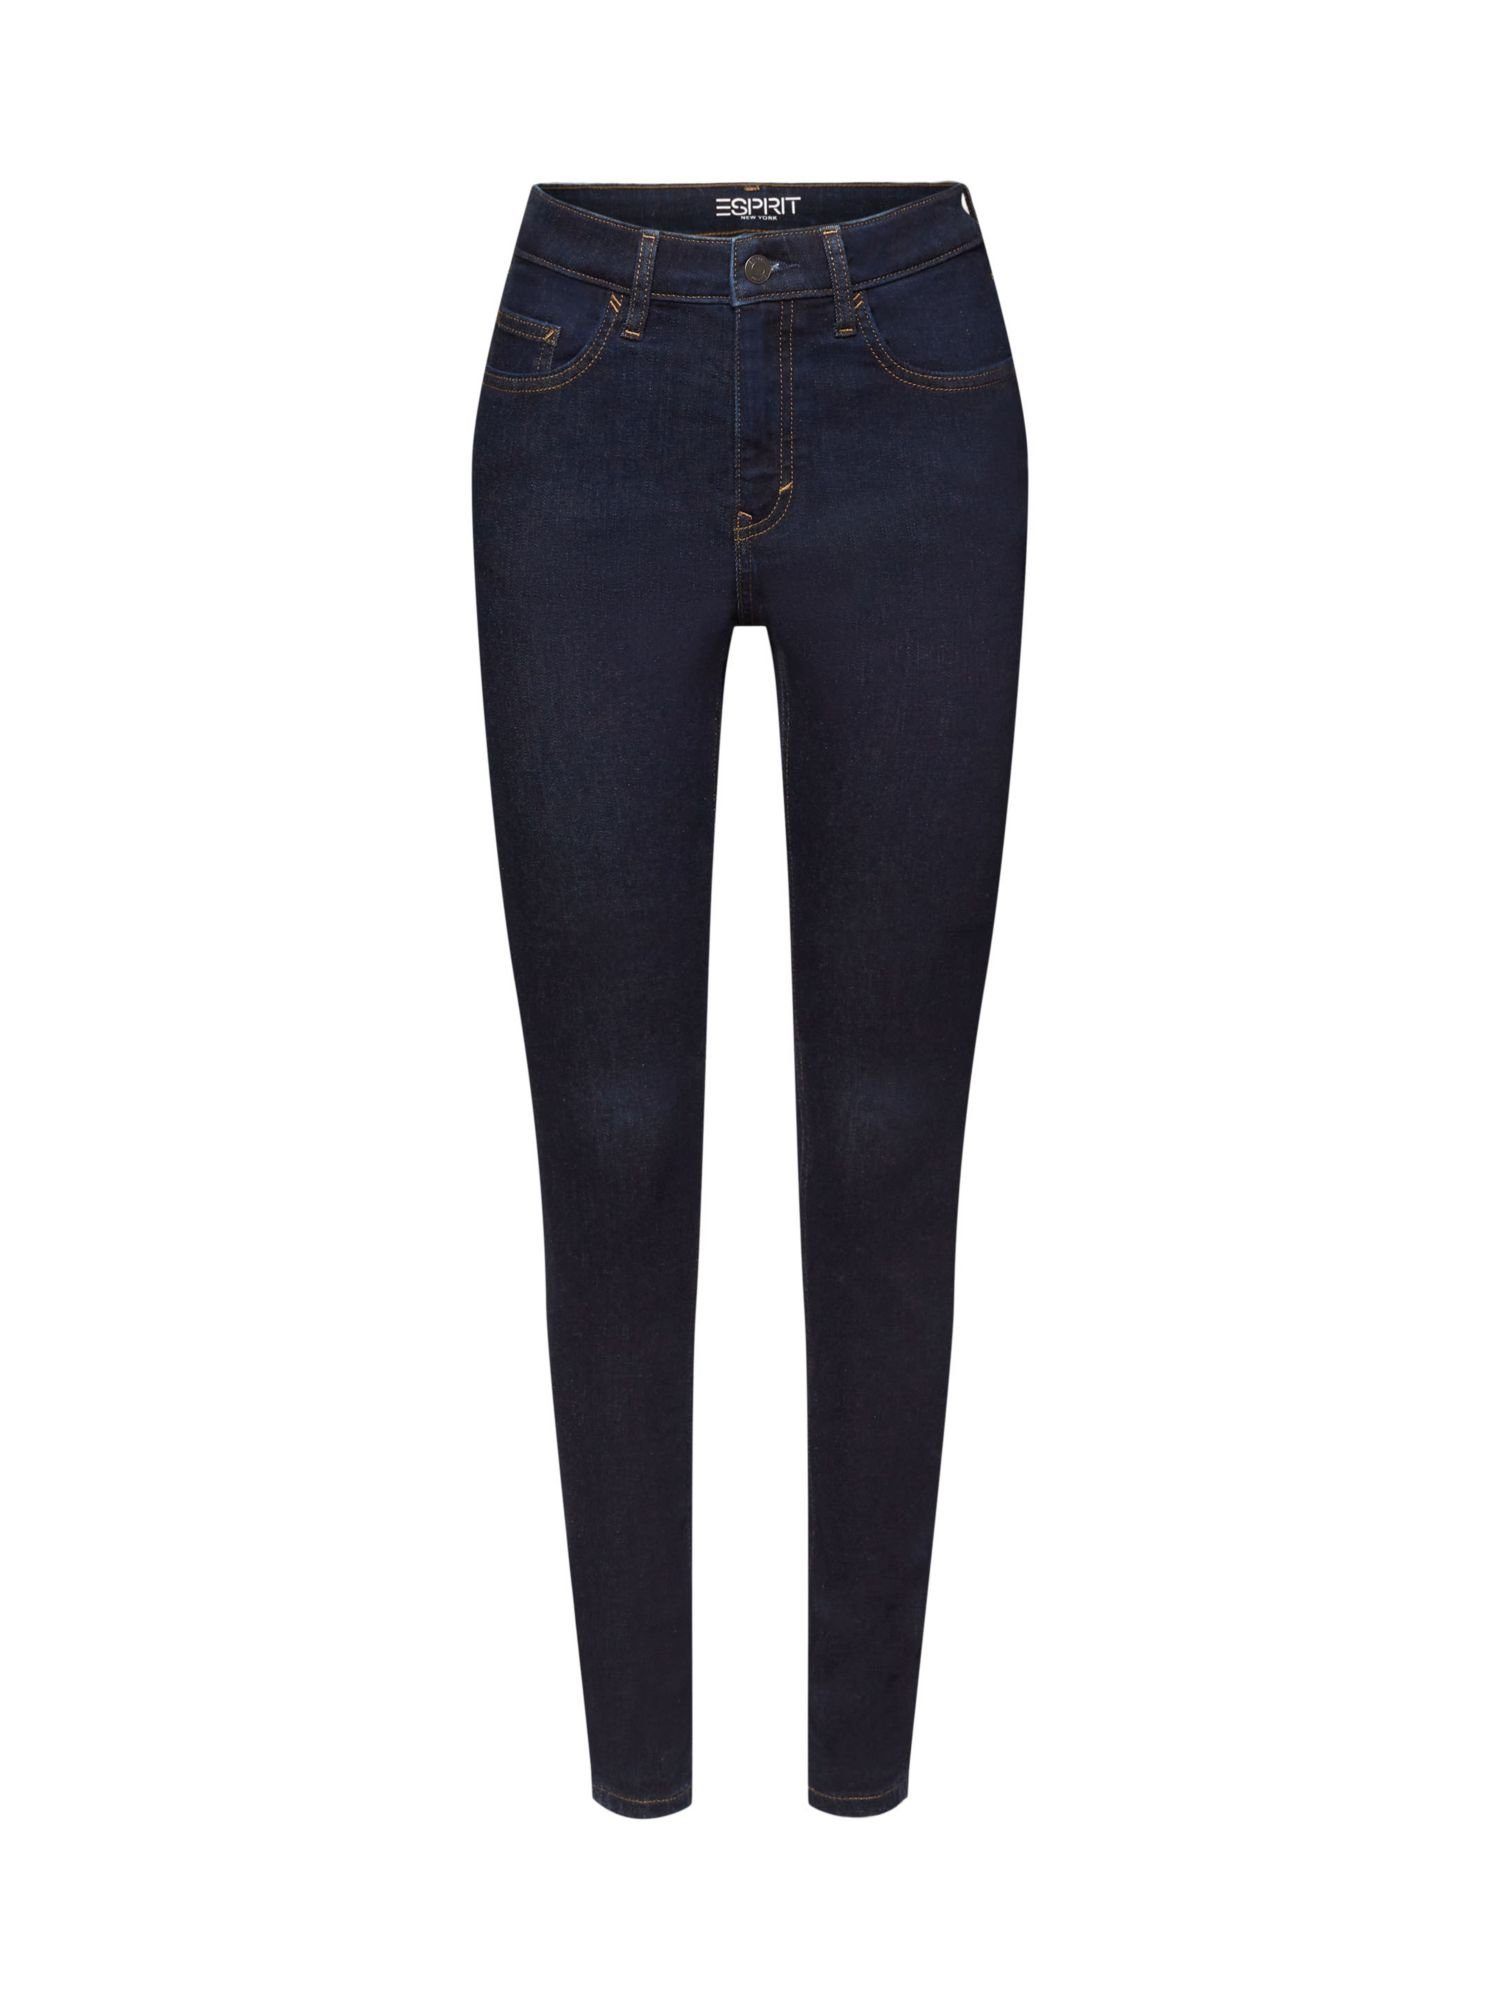 Esprit Skinny-fit-Jeans Skinny Jeans mit hohem Bund, Baumwollstretch